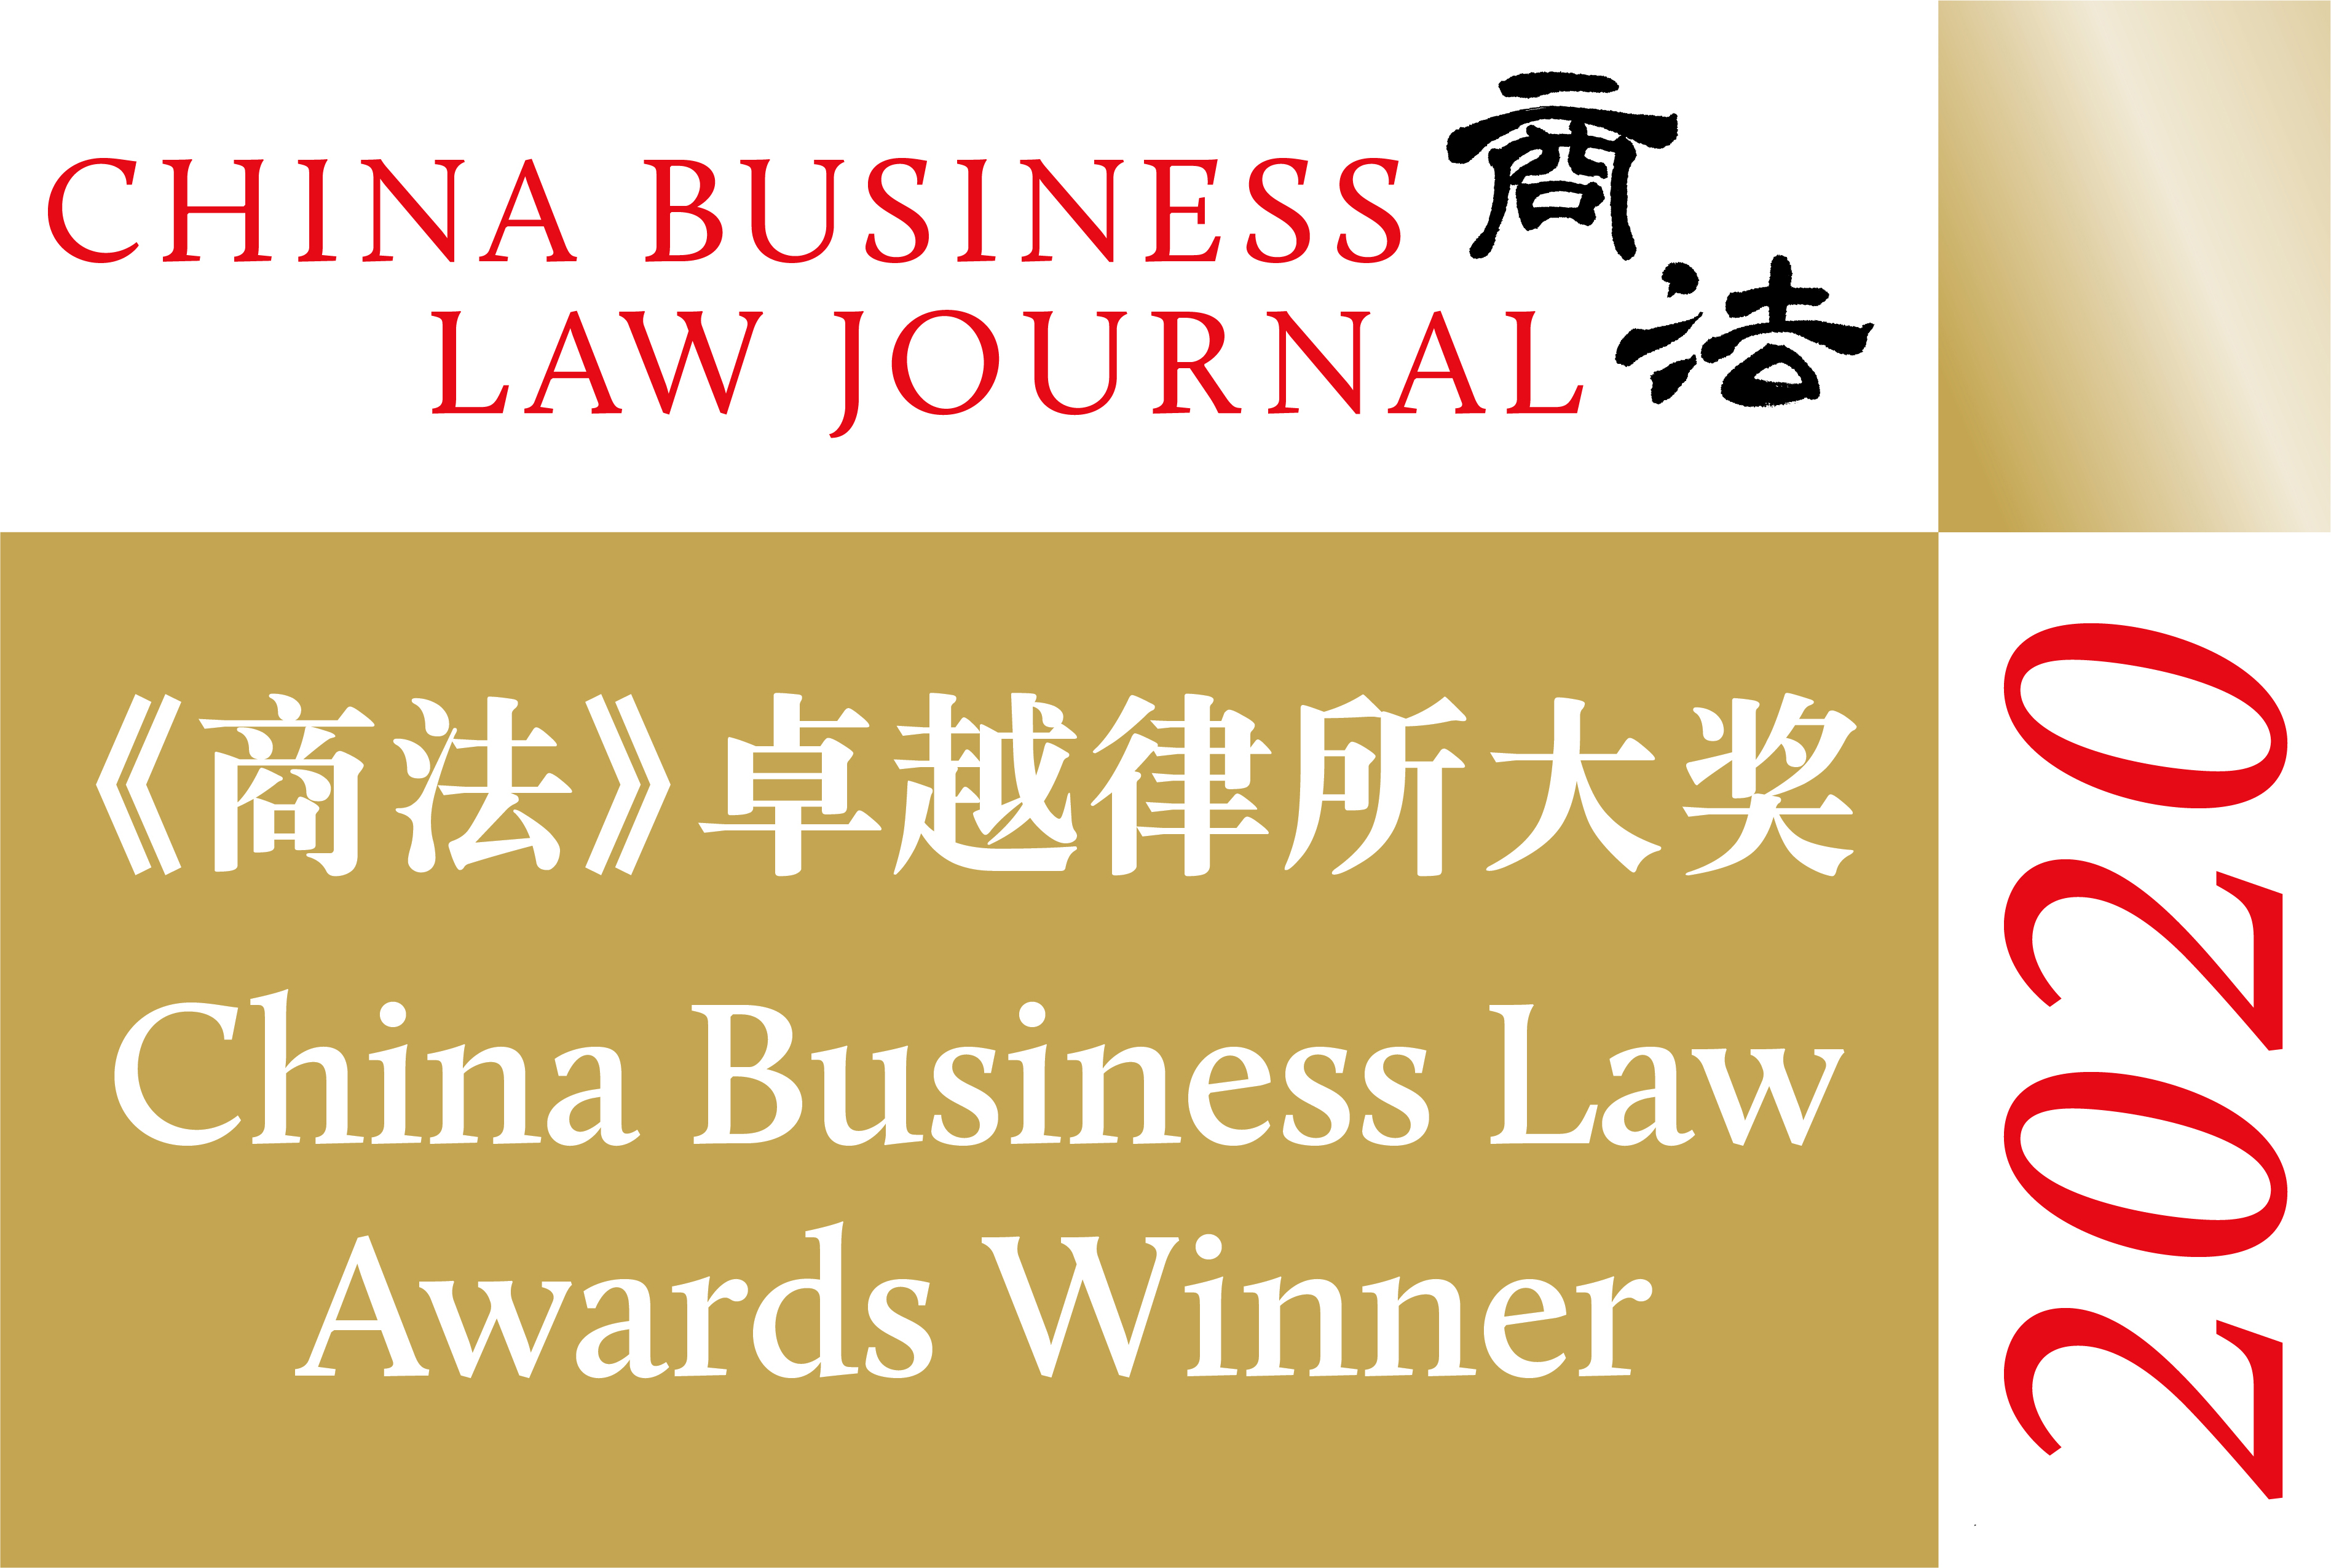 China Business Law Awards Winner 2020